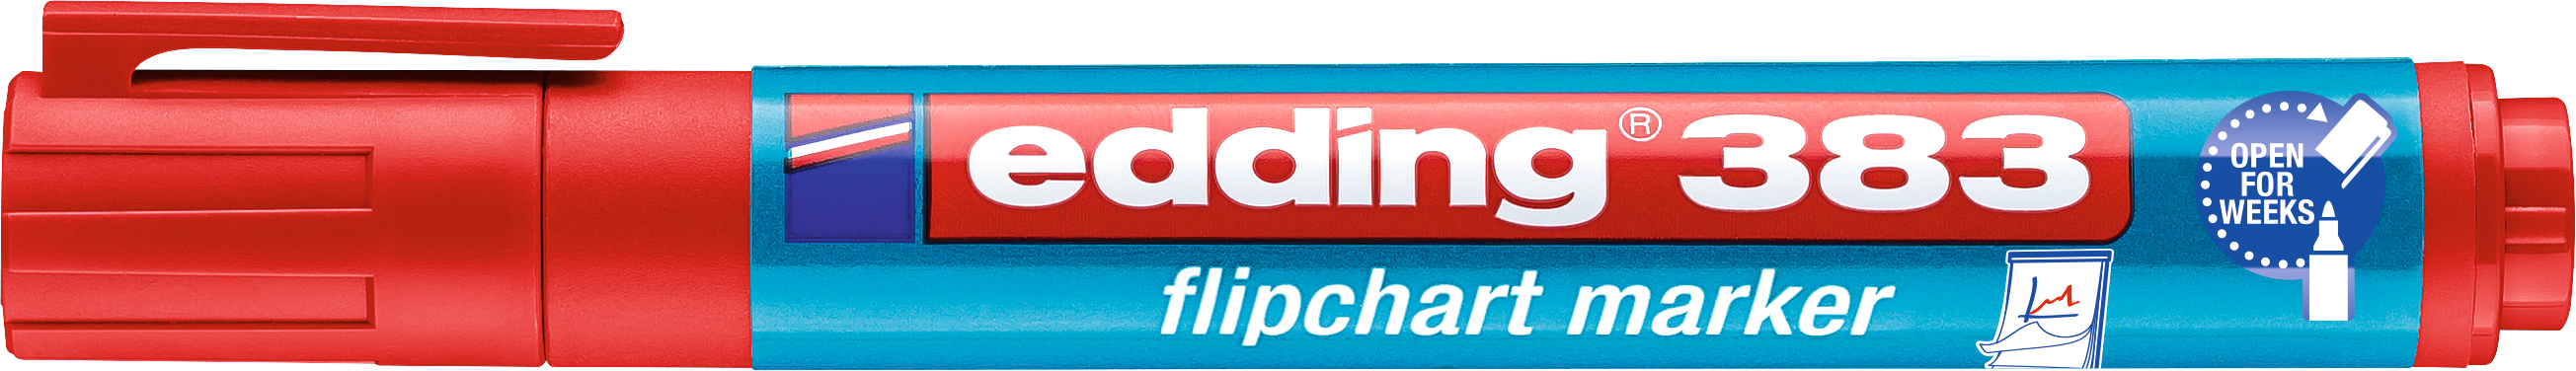 EDDING Flipchart Marker 383 1-5mm 383-3 blau